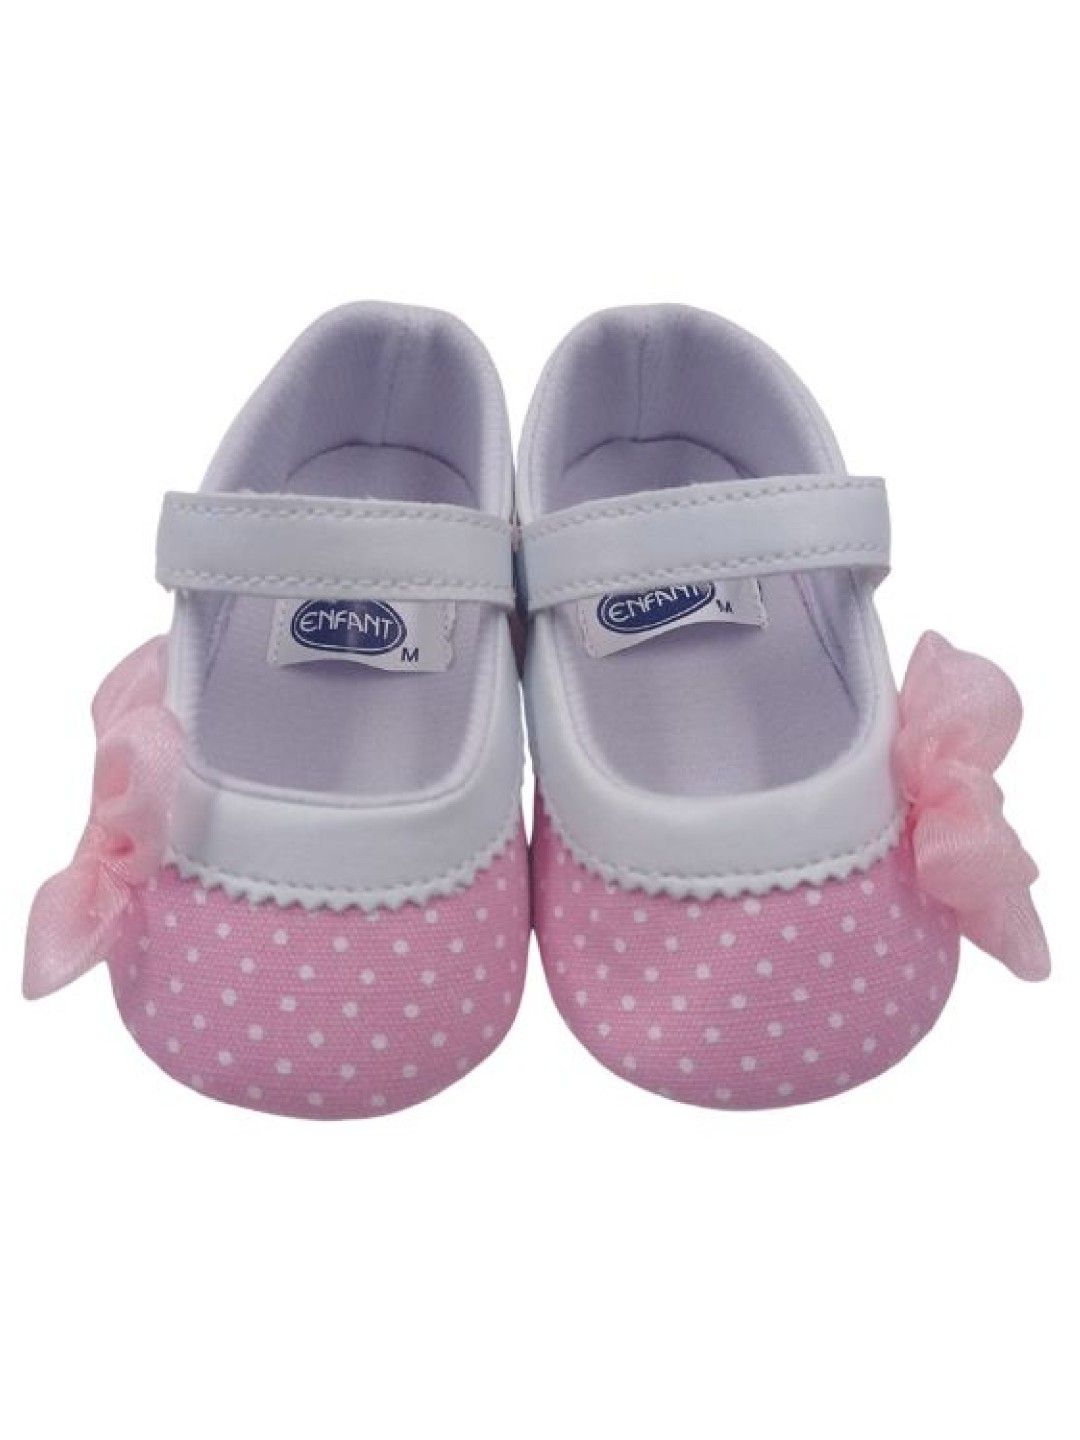 Enfant Baby Shoes